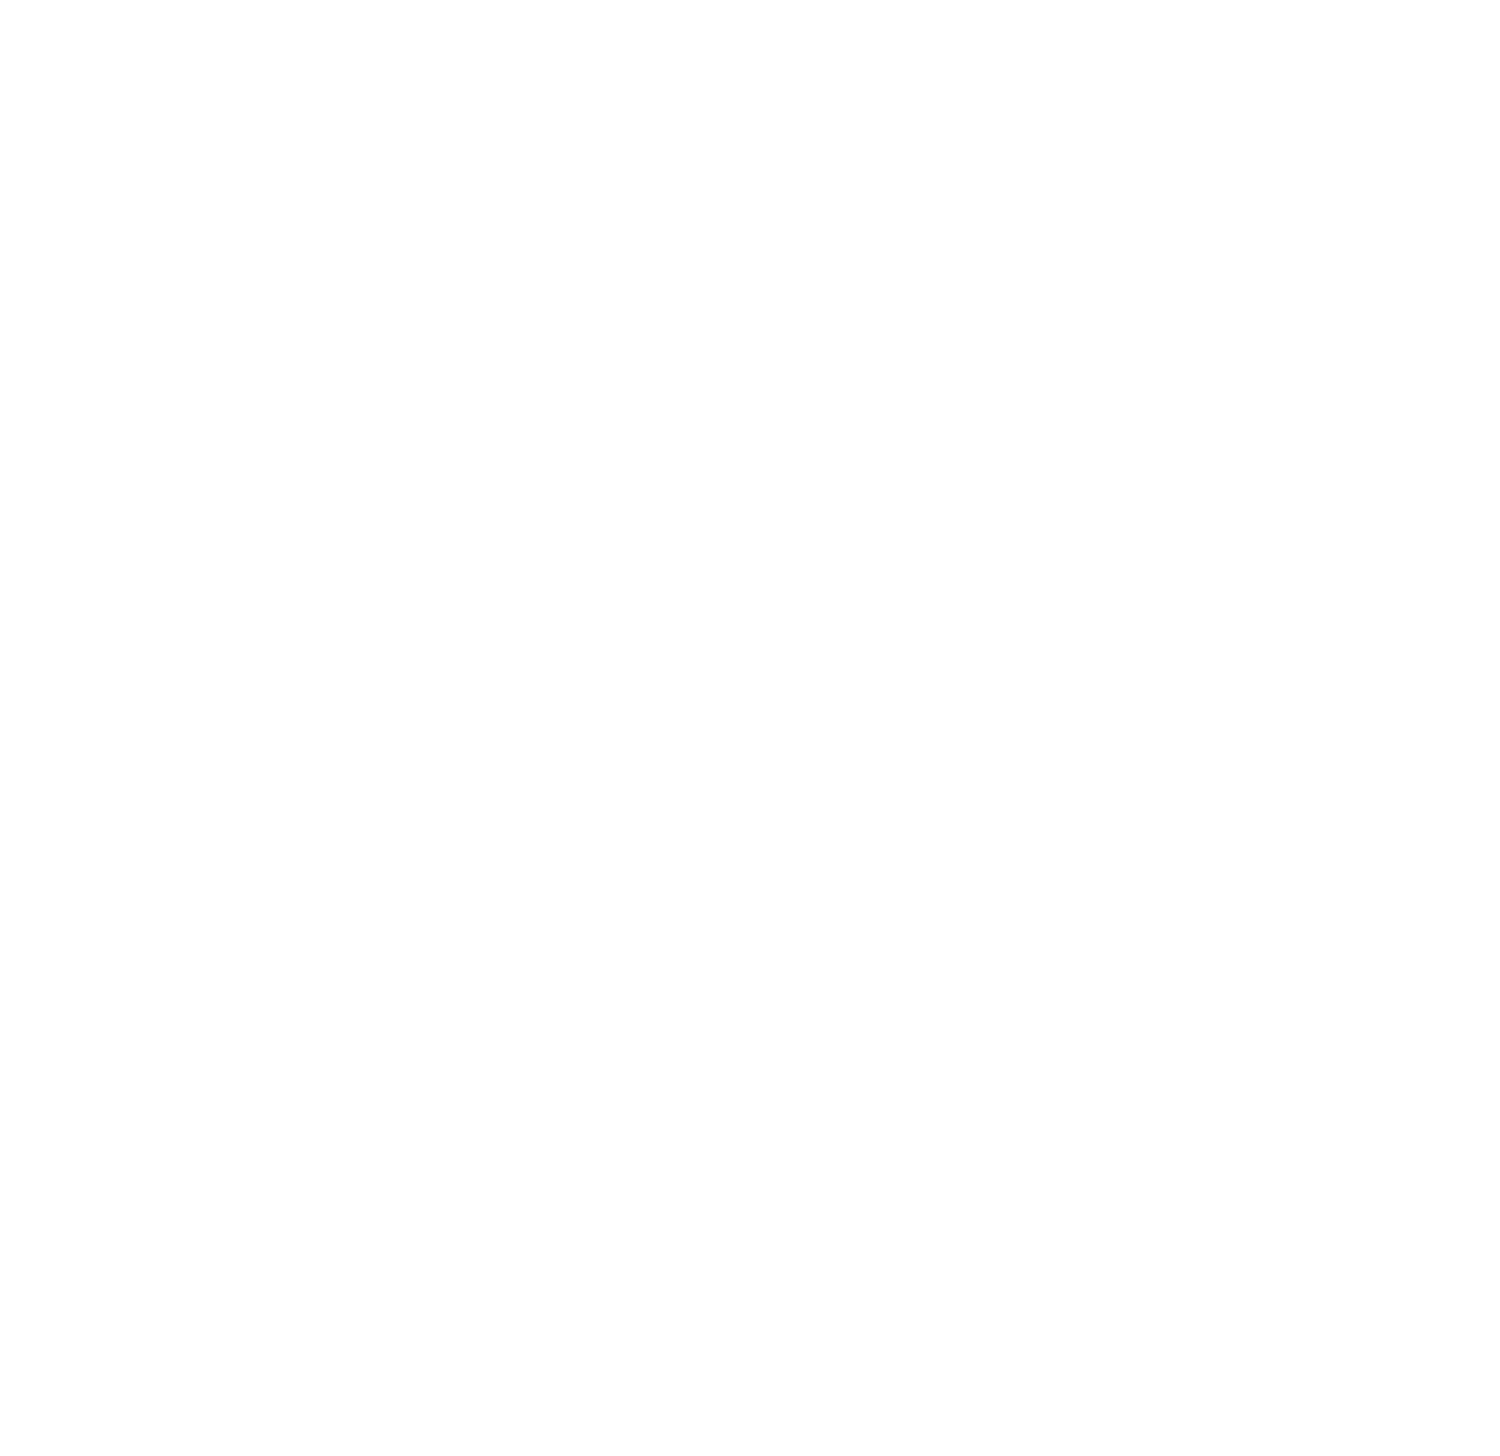 Steel City Pizza - Middletown Ohio